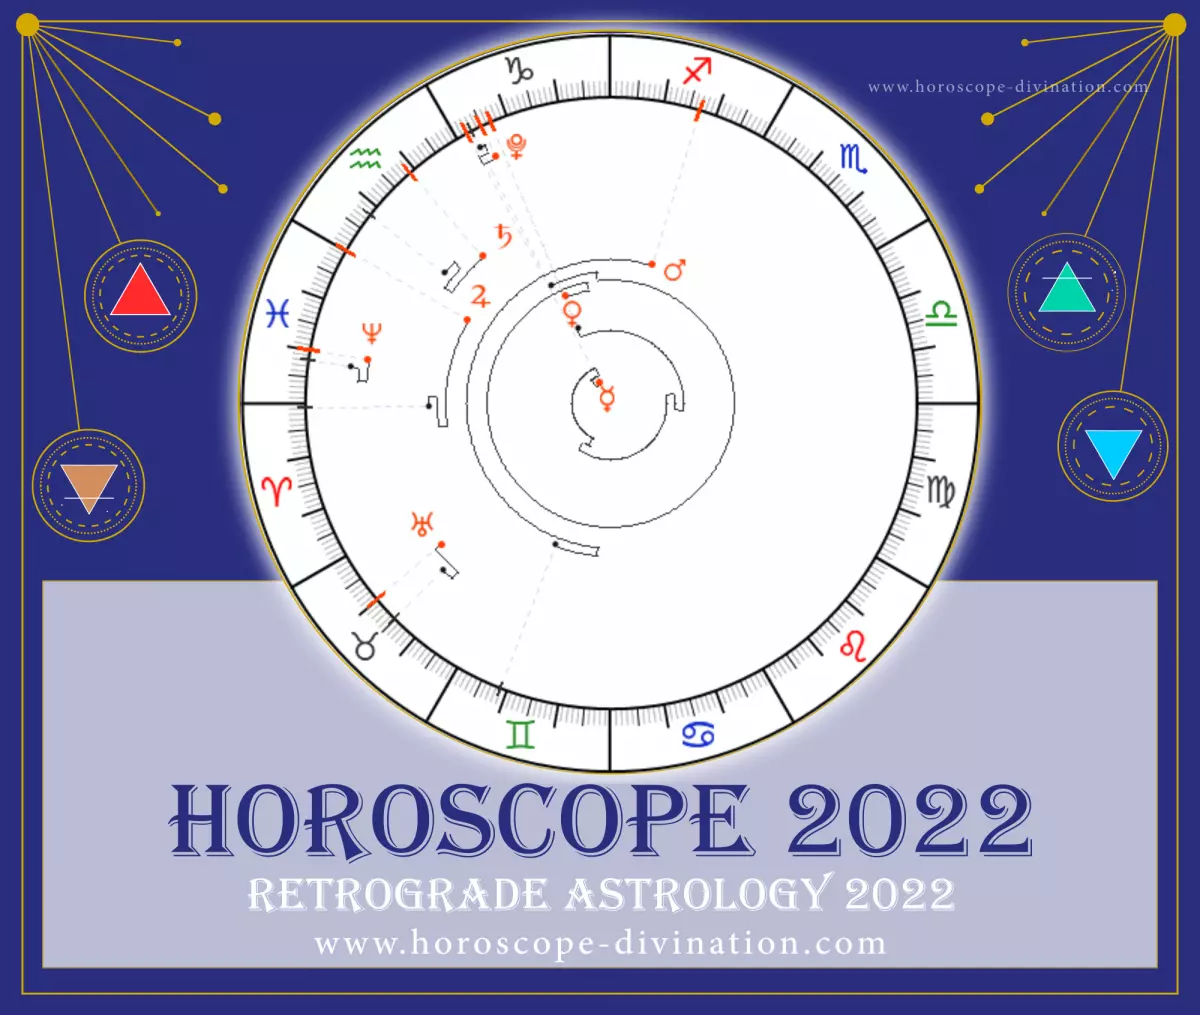 Retrograde Astrology 2022